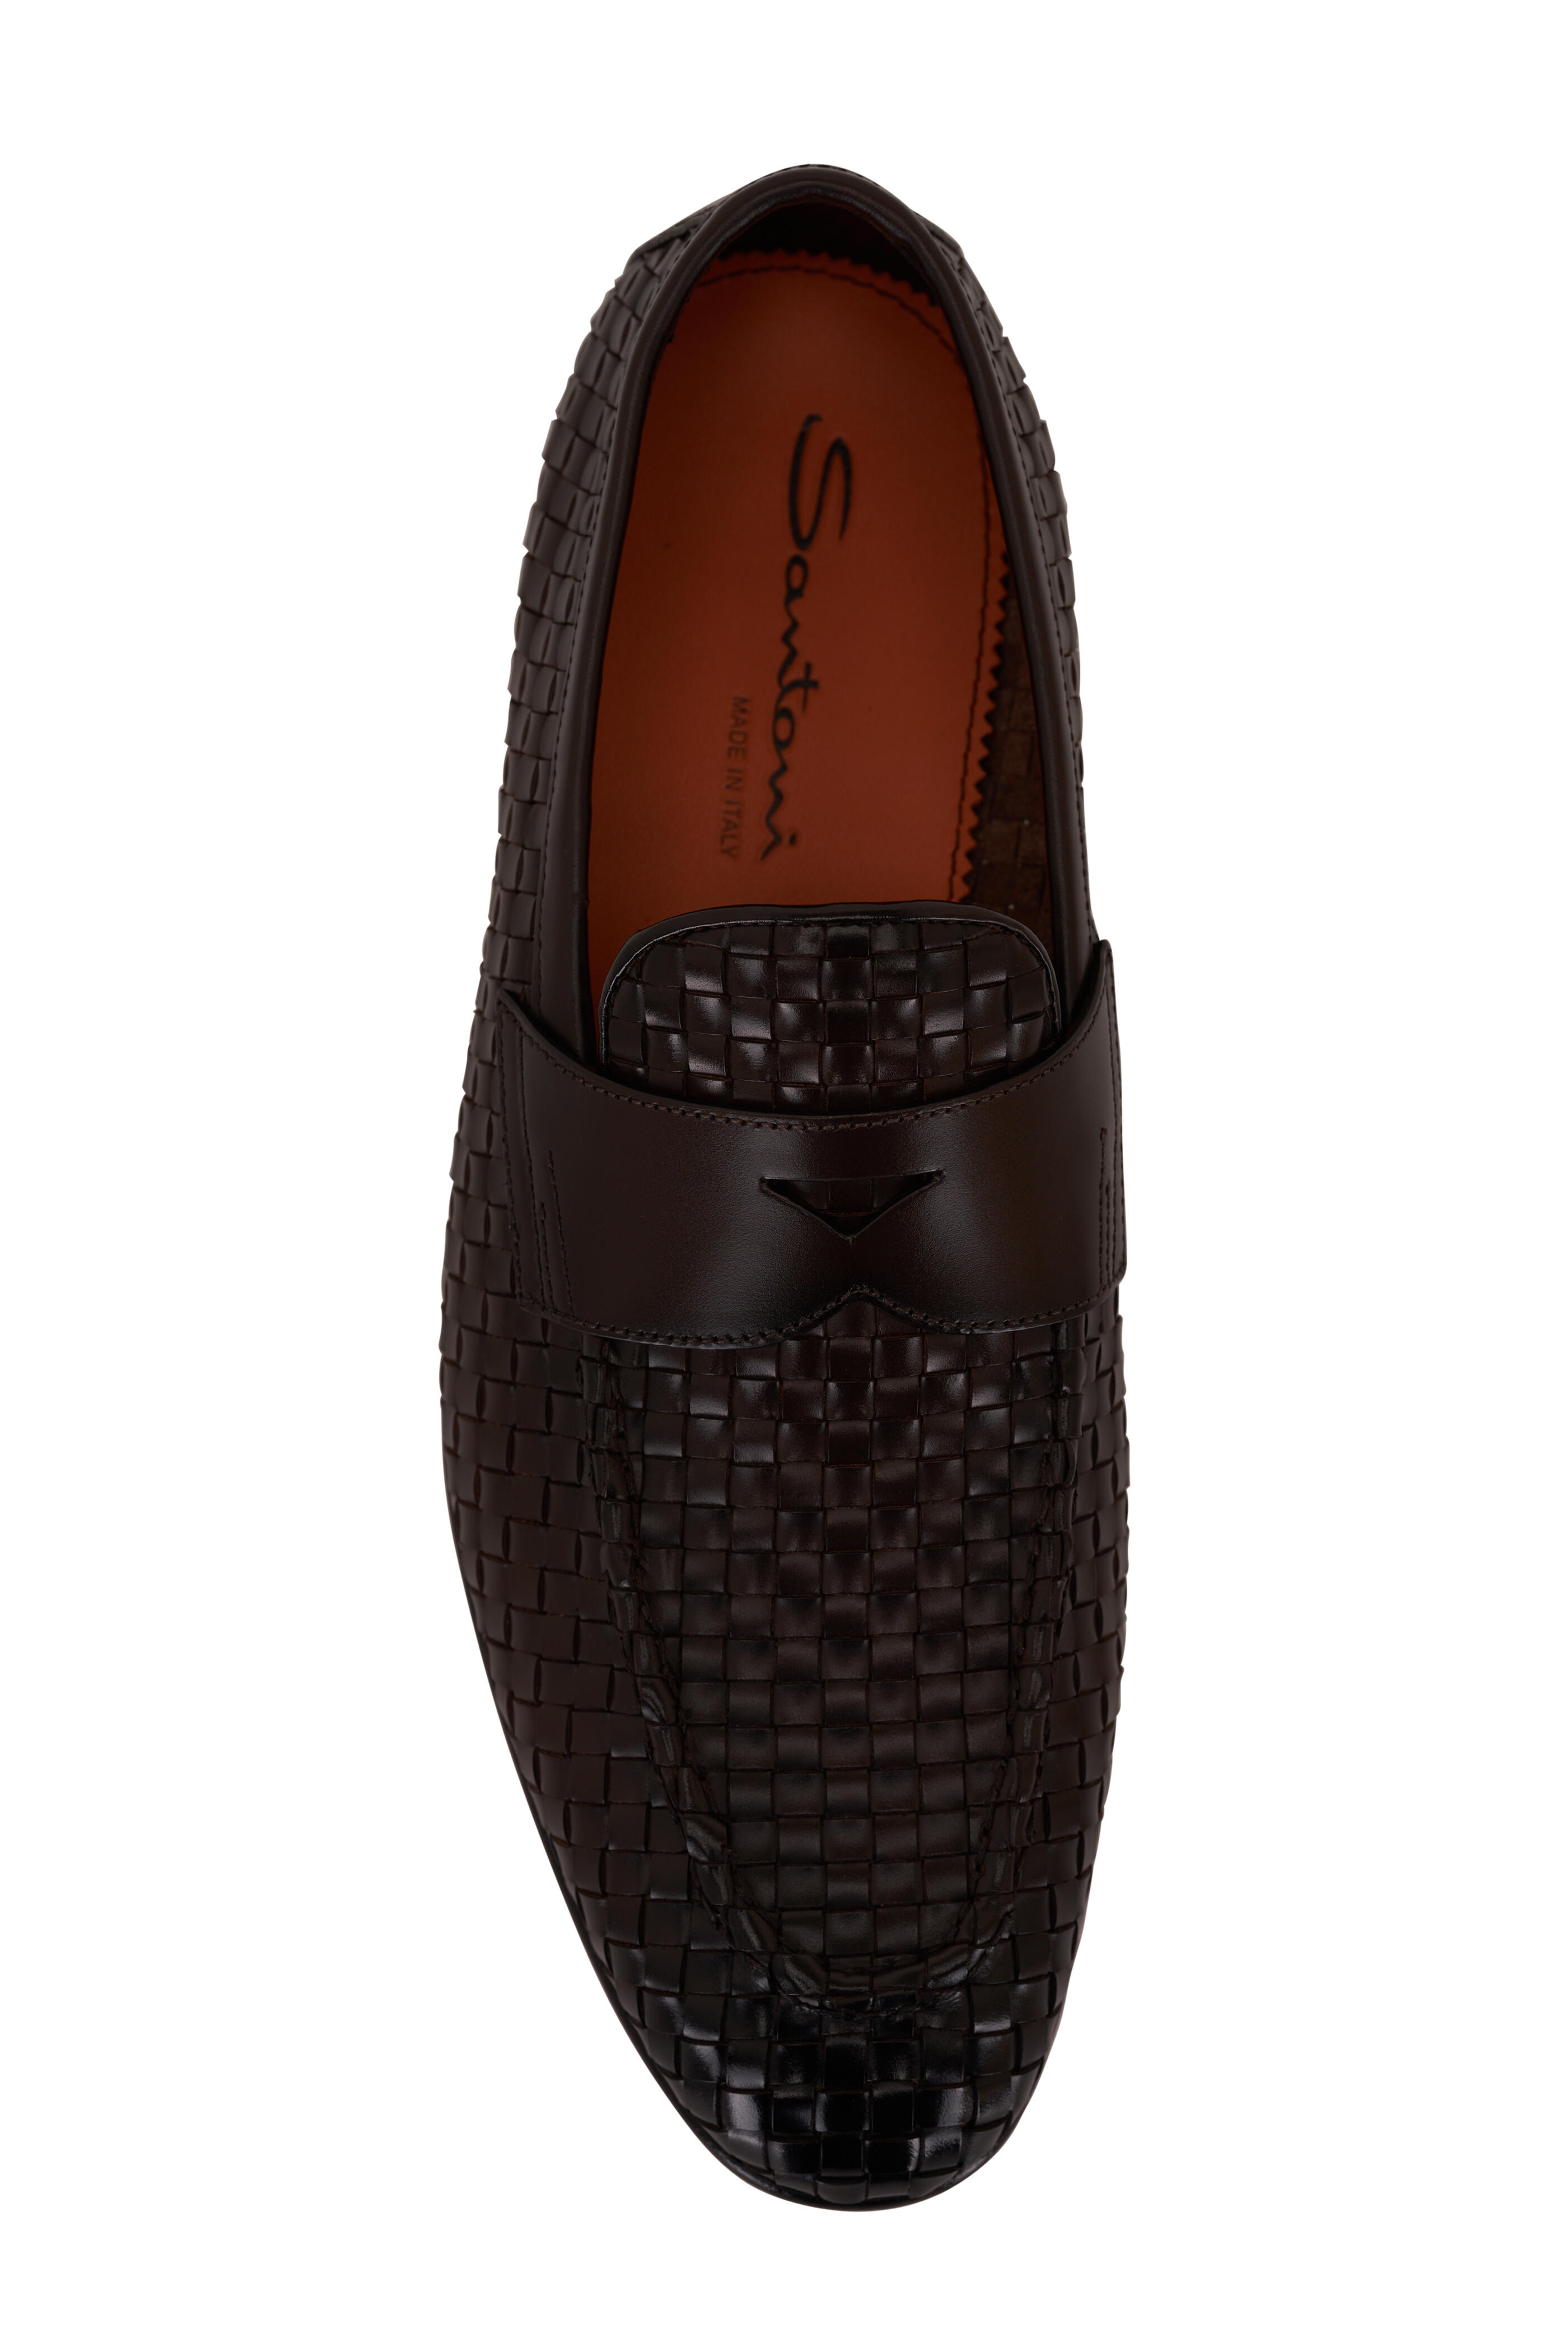 Santoni - Gwendal Dark Brown Woven Leather Loafer